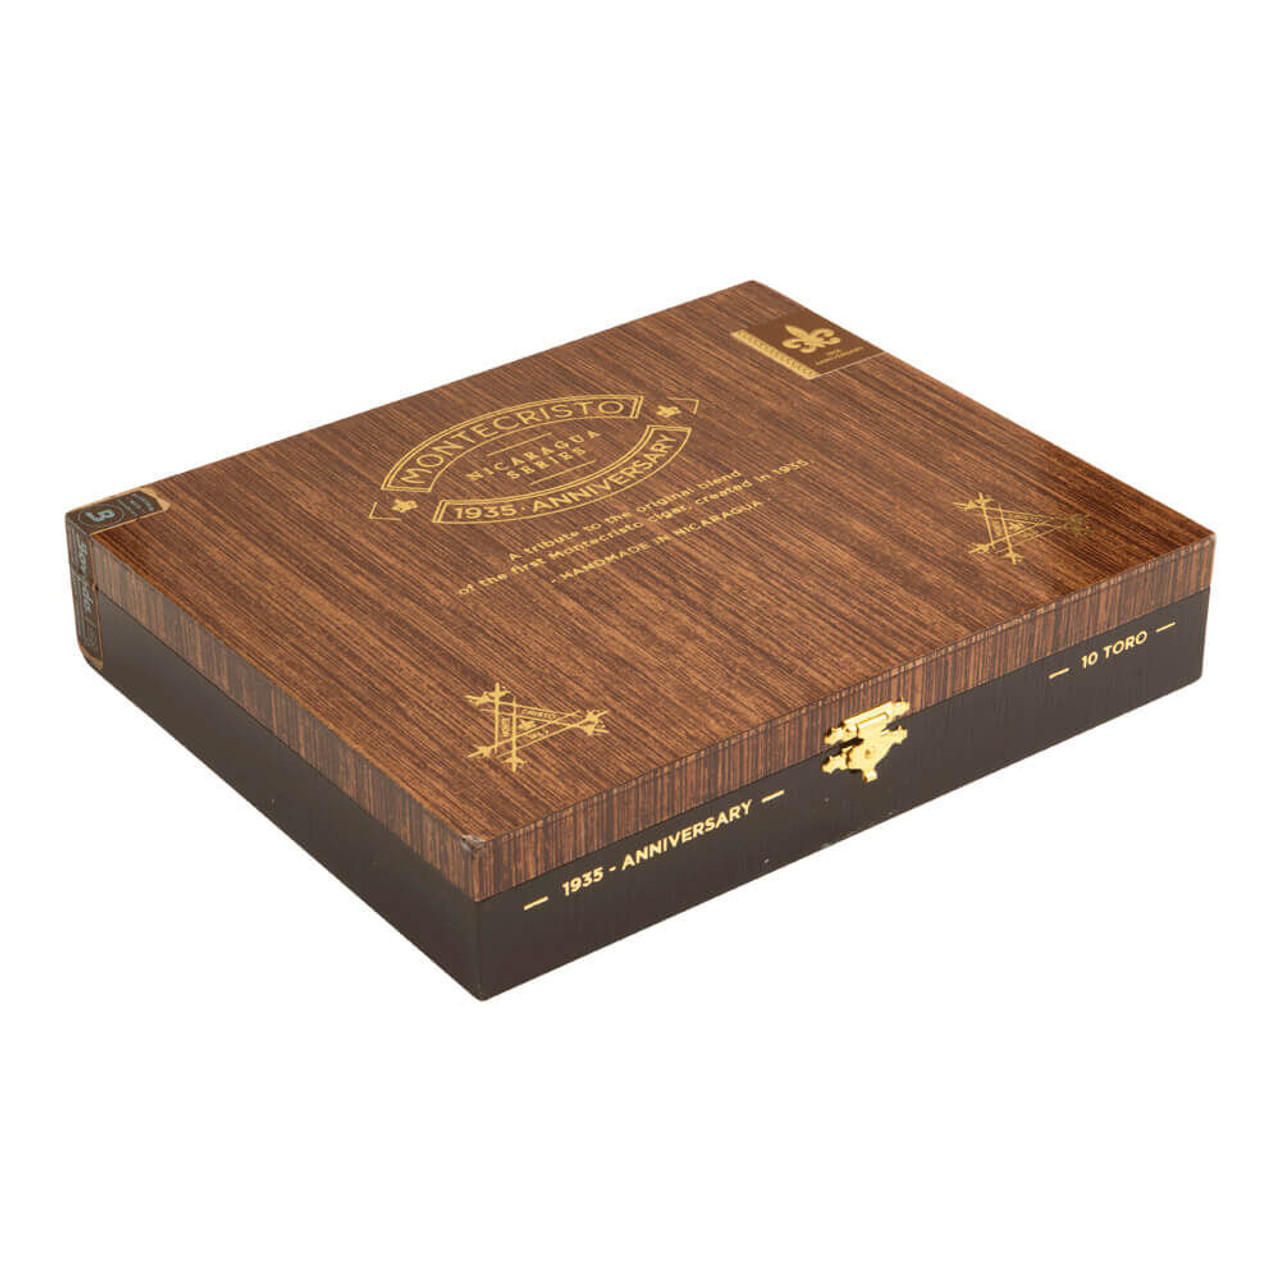 Montecristo 1935 Anniversary Nicaragua Toro Cigars - 6 x 54 (Box of 10) *Box